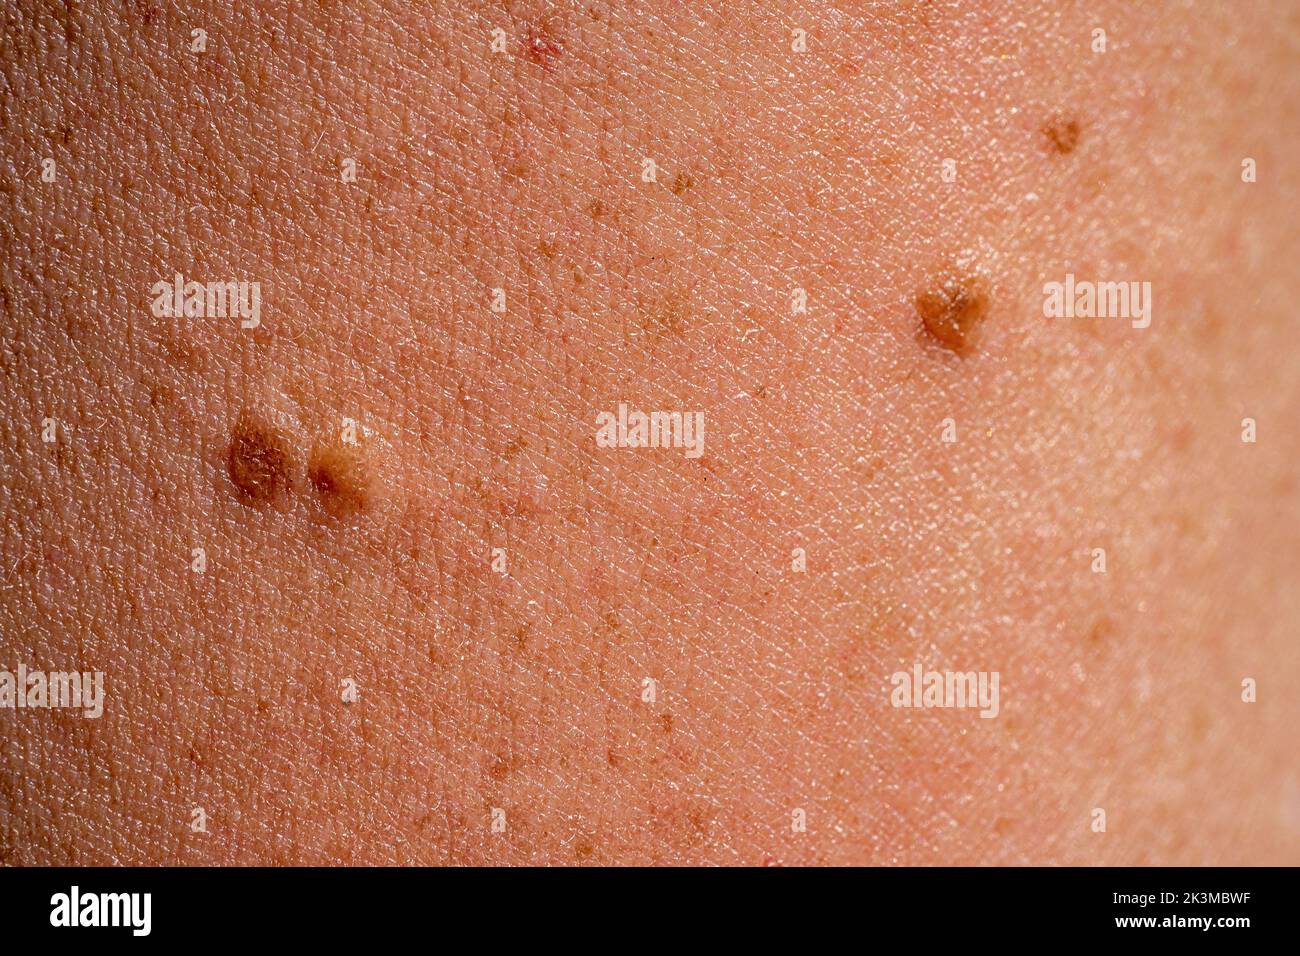 A macro shot of the human skin with nevi, moles. Stock Photo